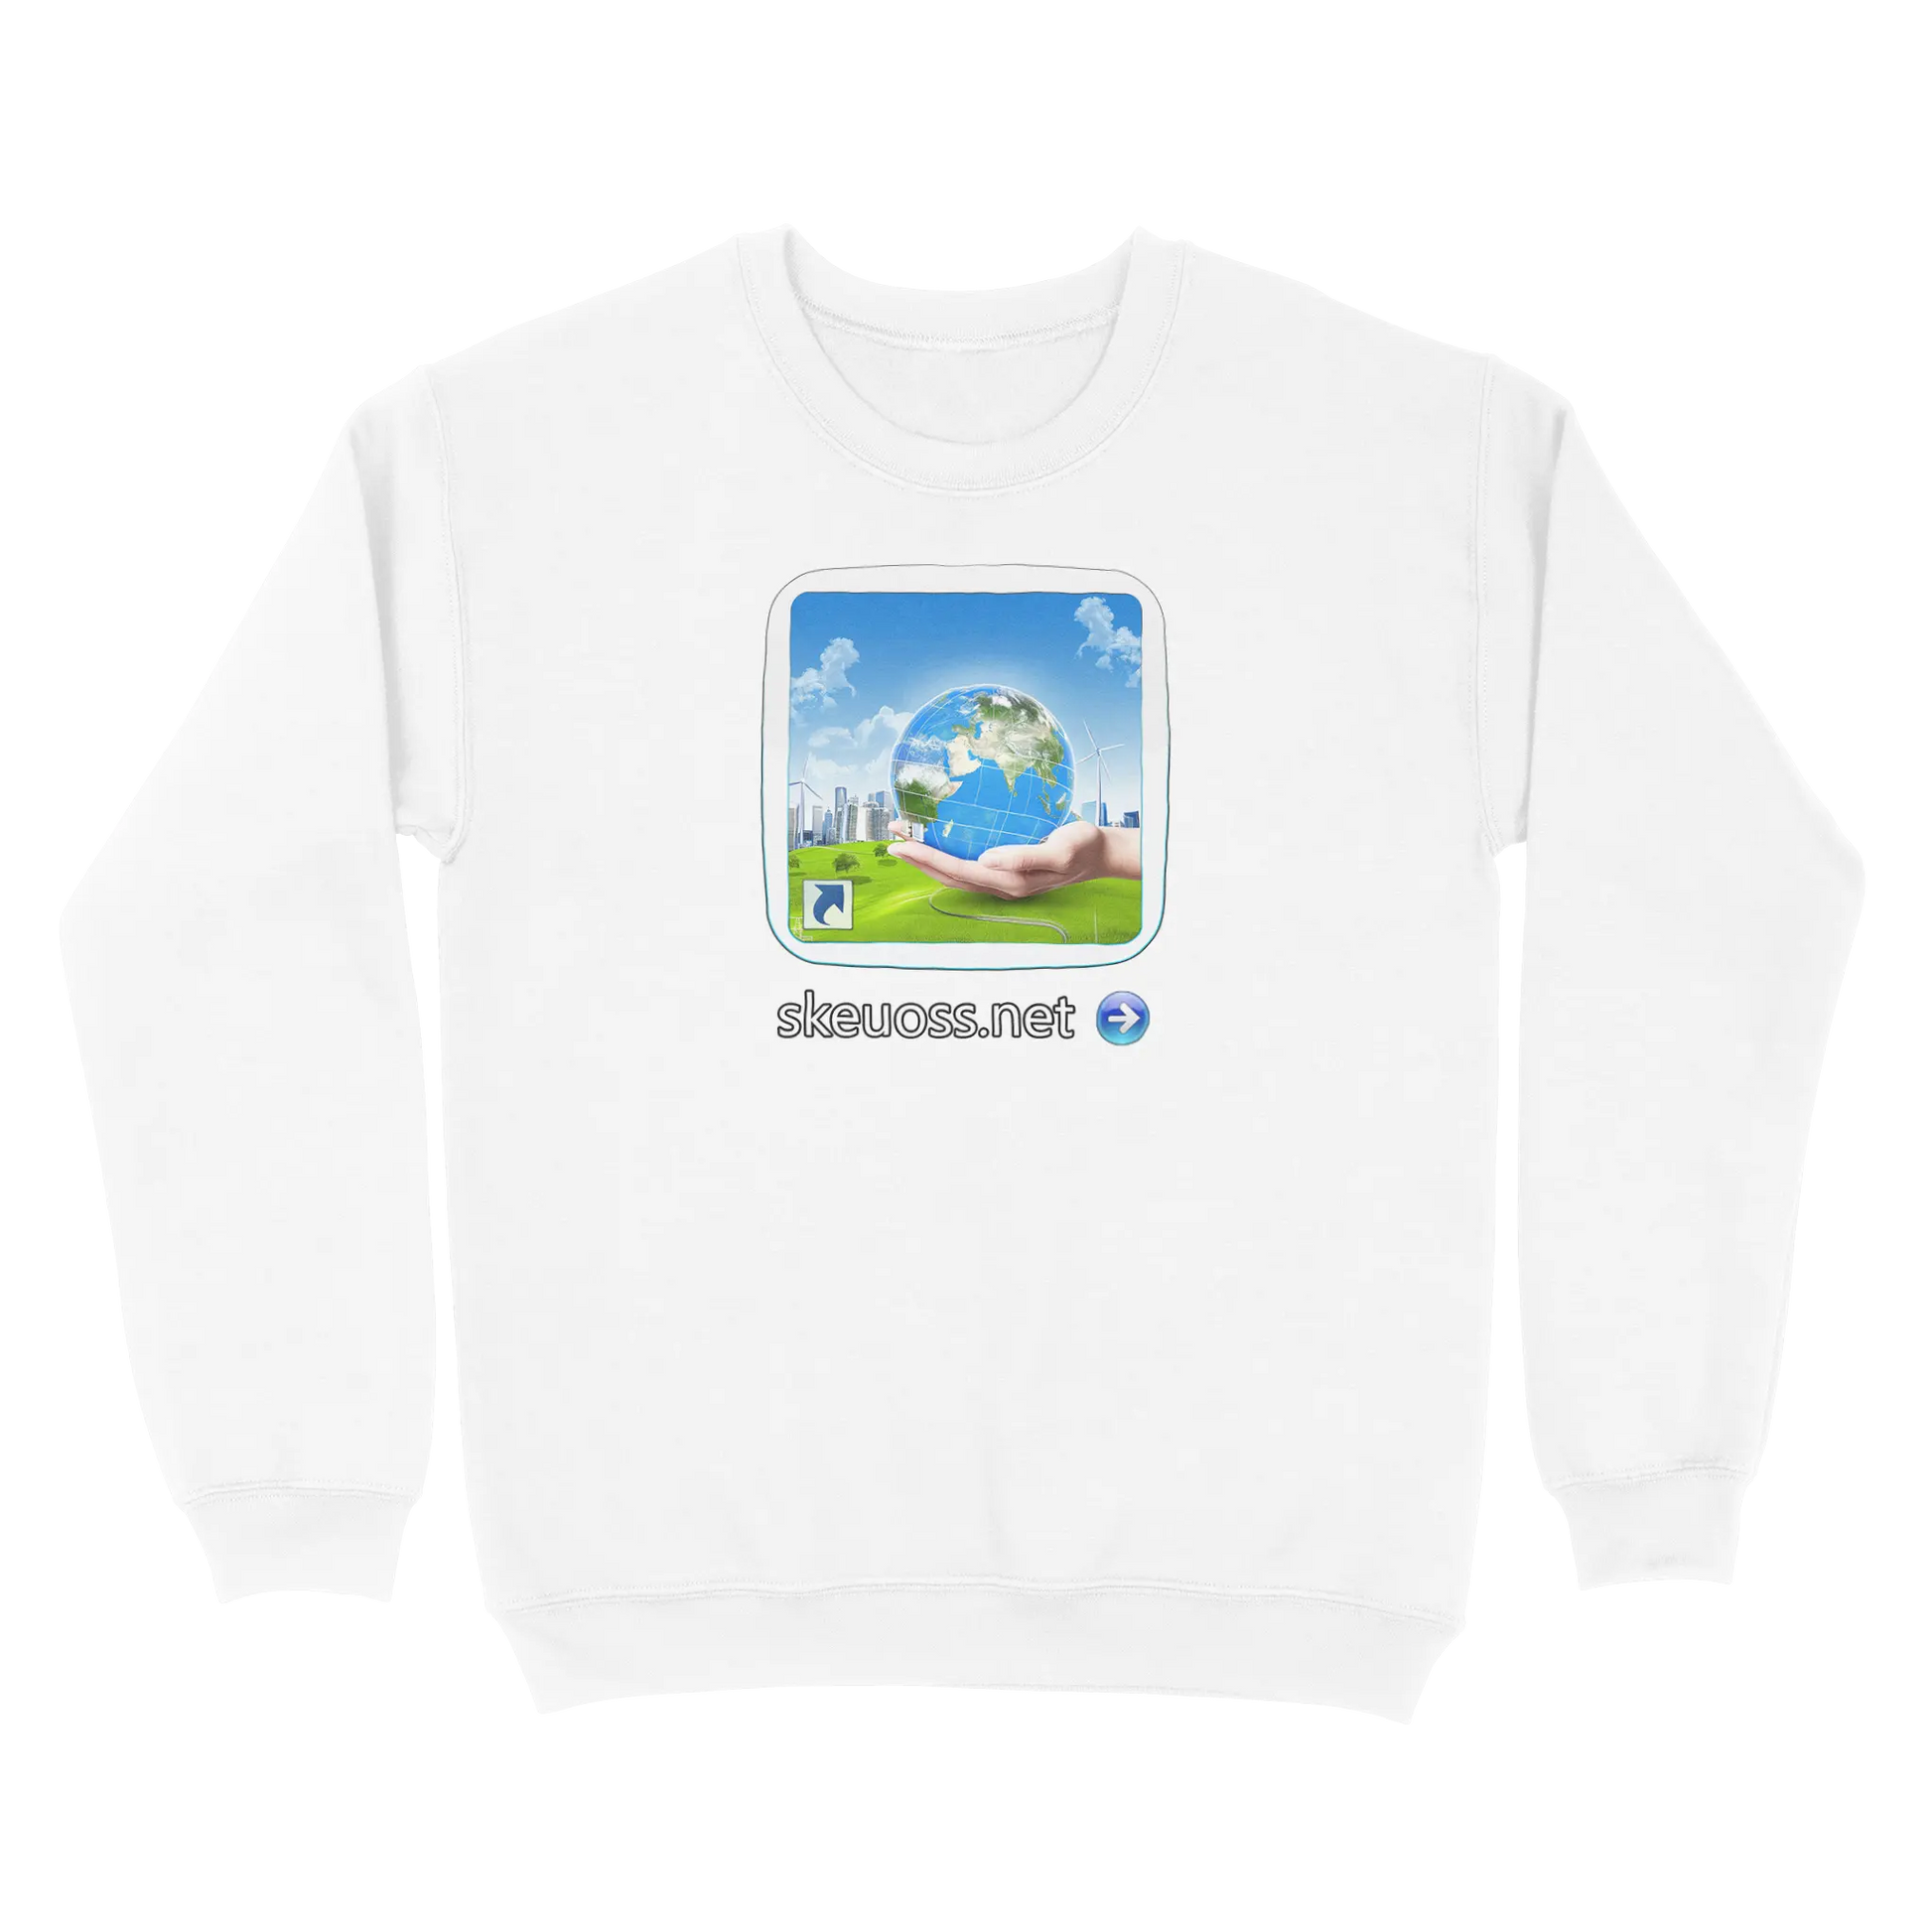 Frutiger Aero Sweatshirt - User Login Collection - User 327